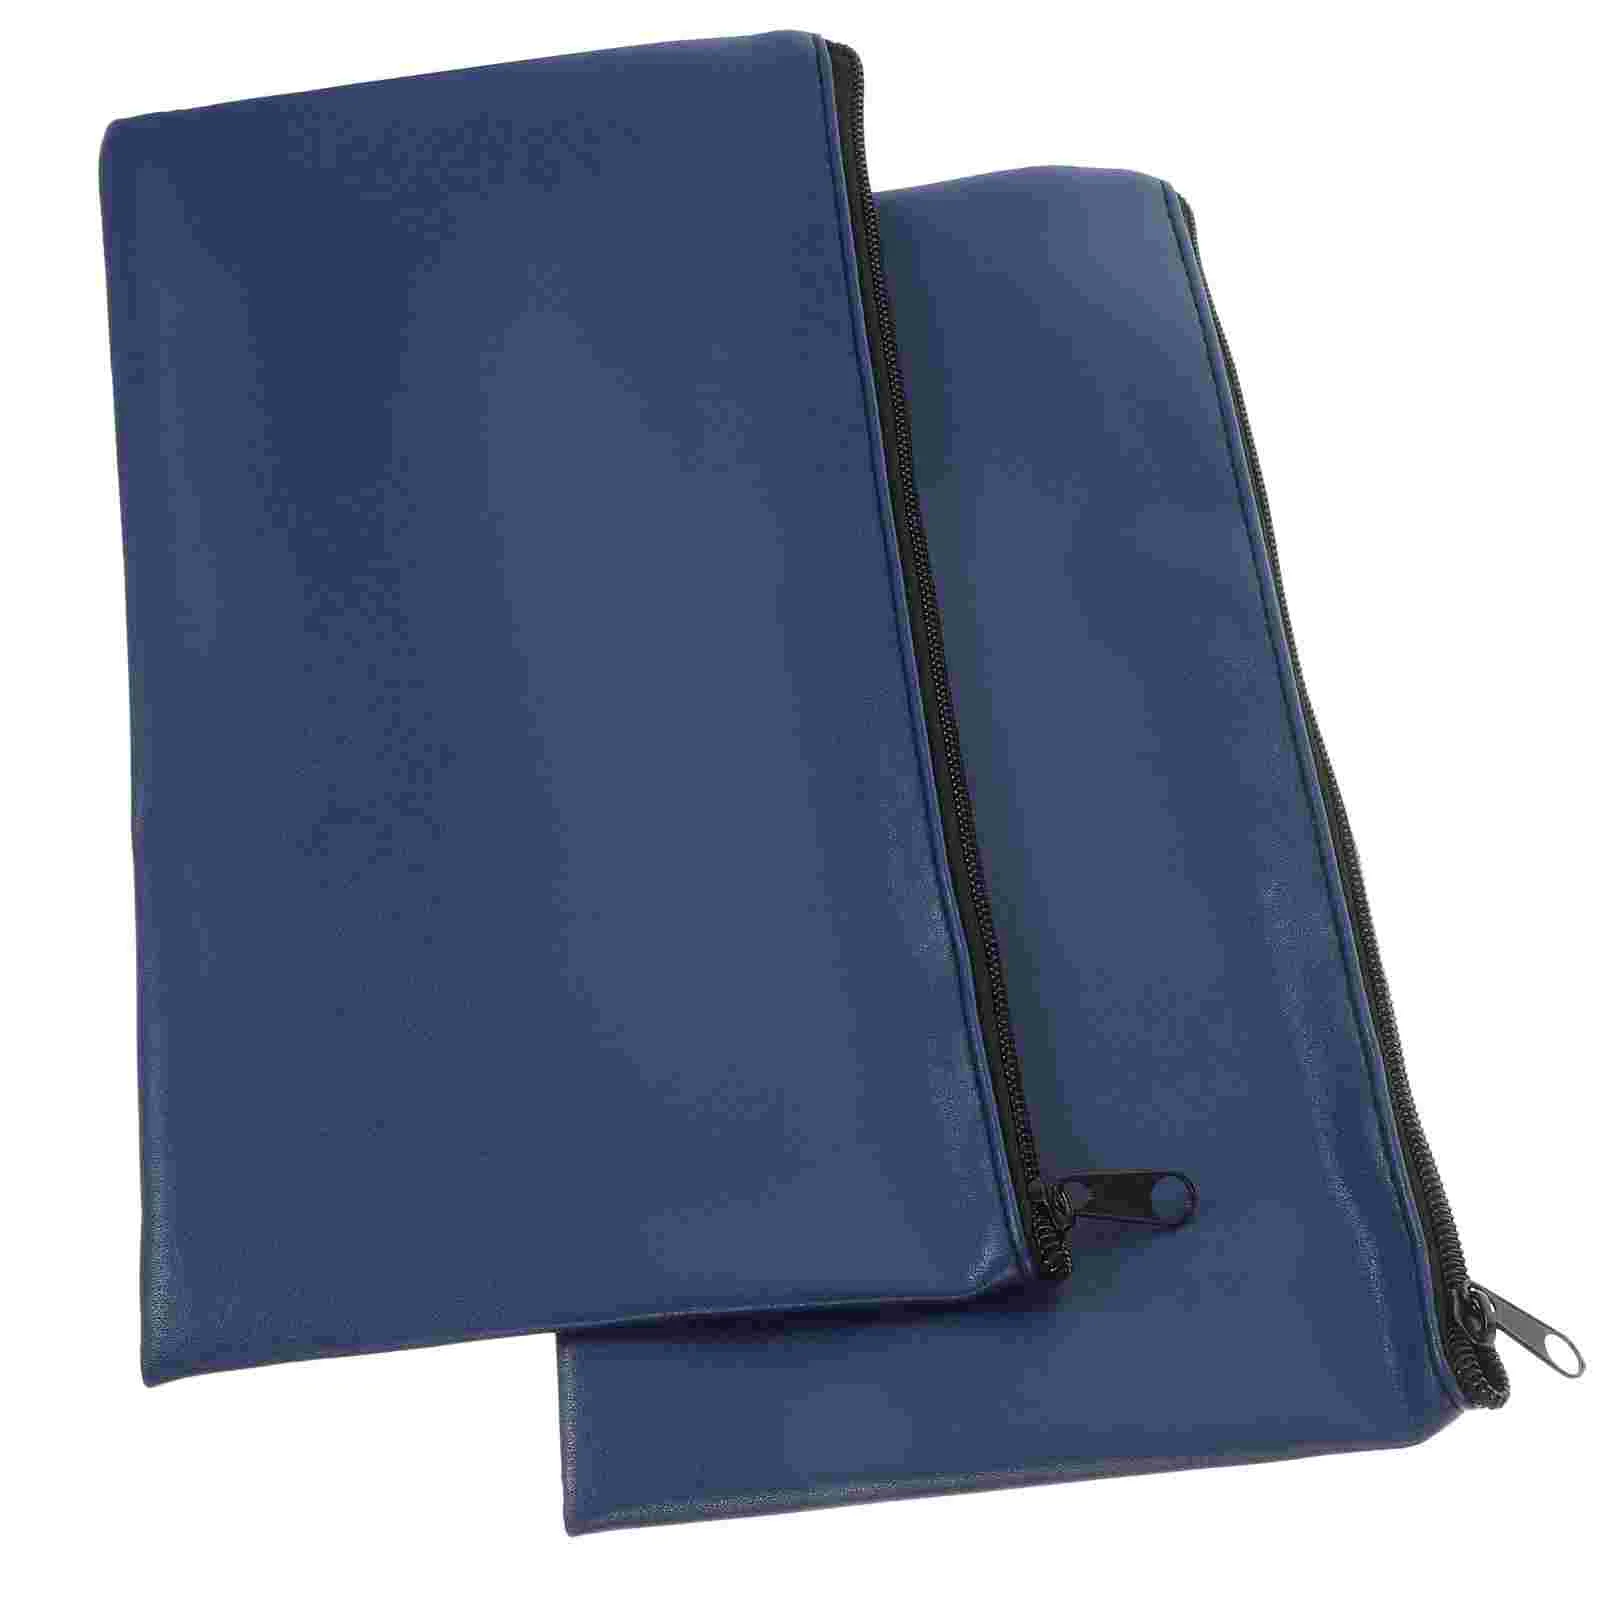 

2 Pcs Pu Bill Bag Cash Deposit Storage 2pcs Packed Blue Money Bags with Zipper for Zippered Pouches Organization